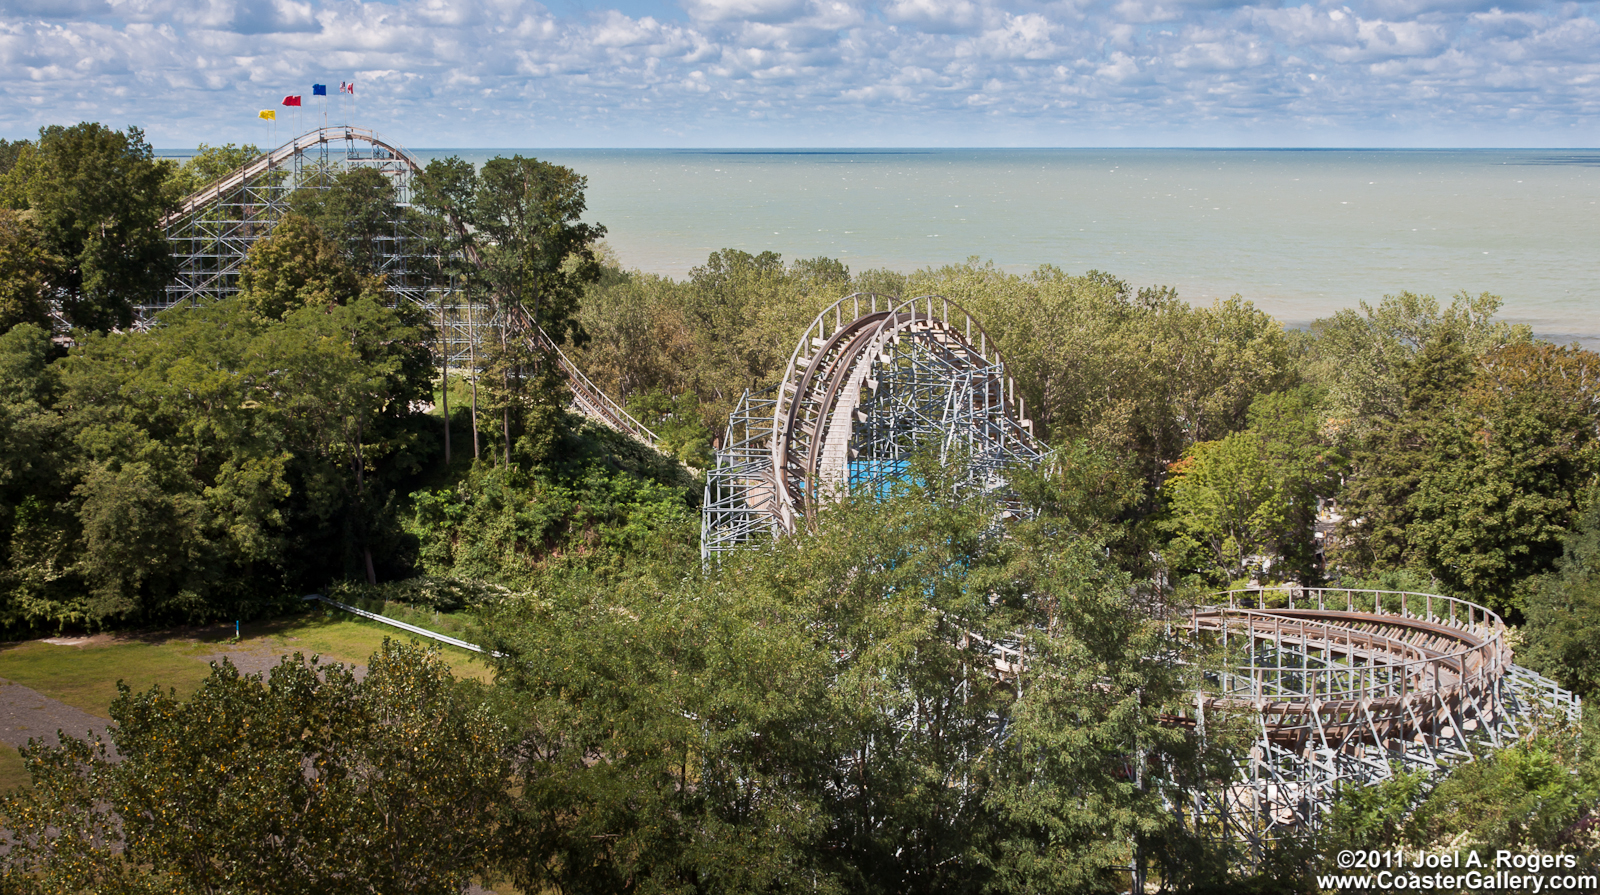 Ravine Flyer 2 roller coaster and Lake Erie shore